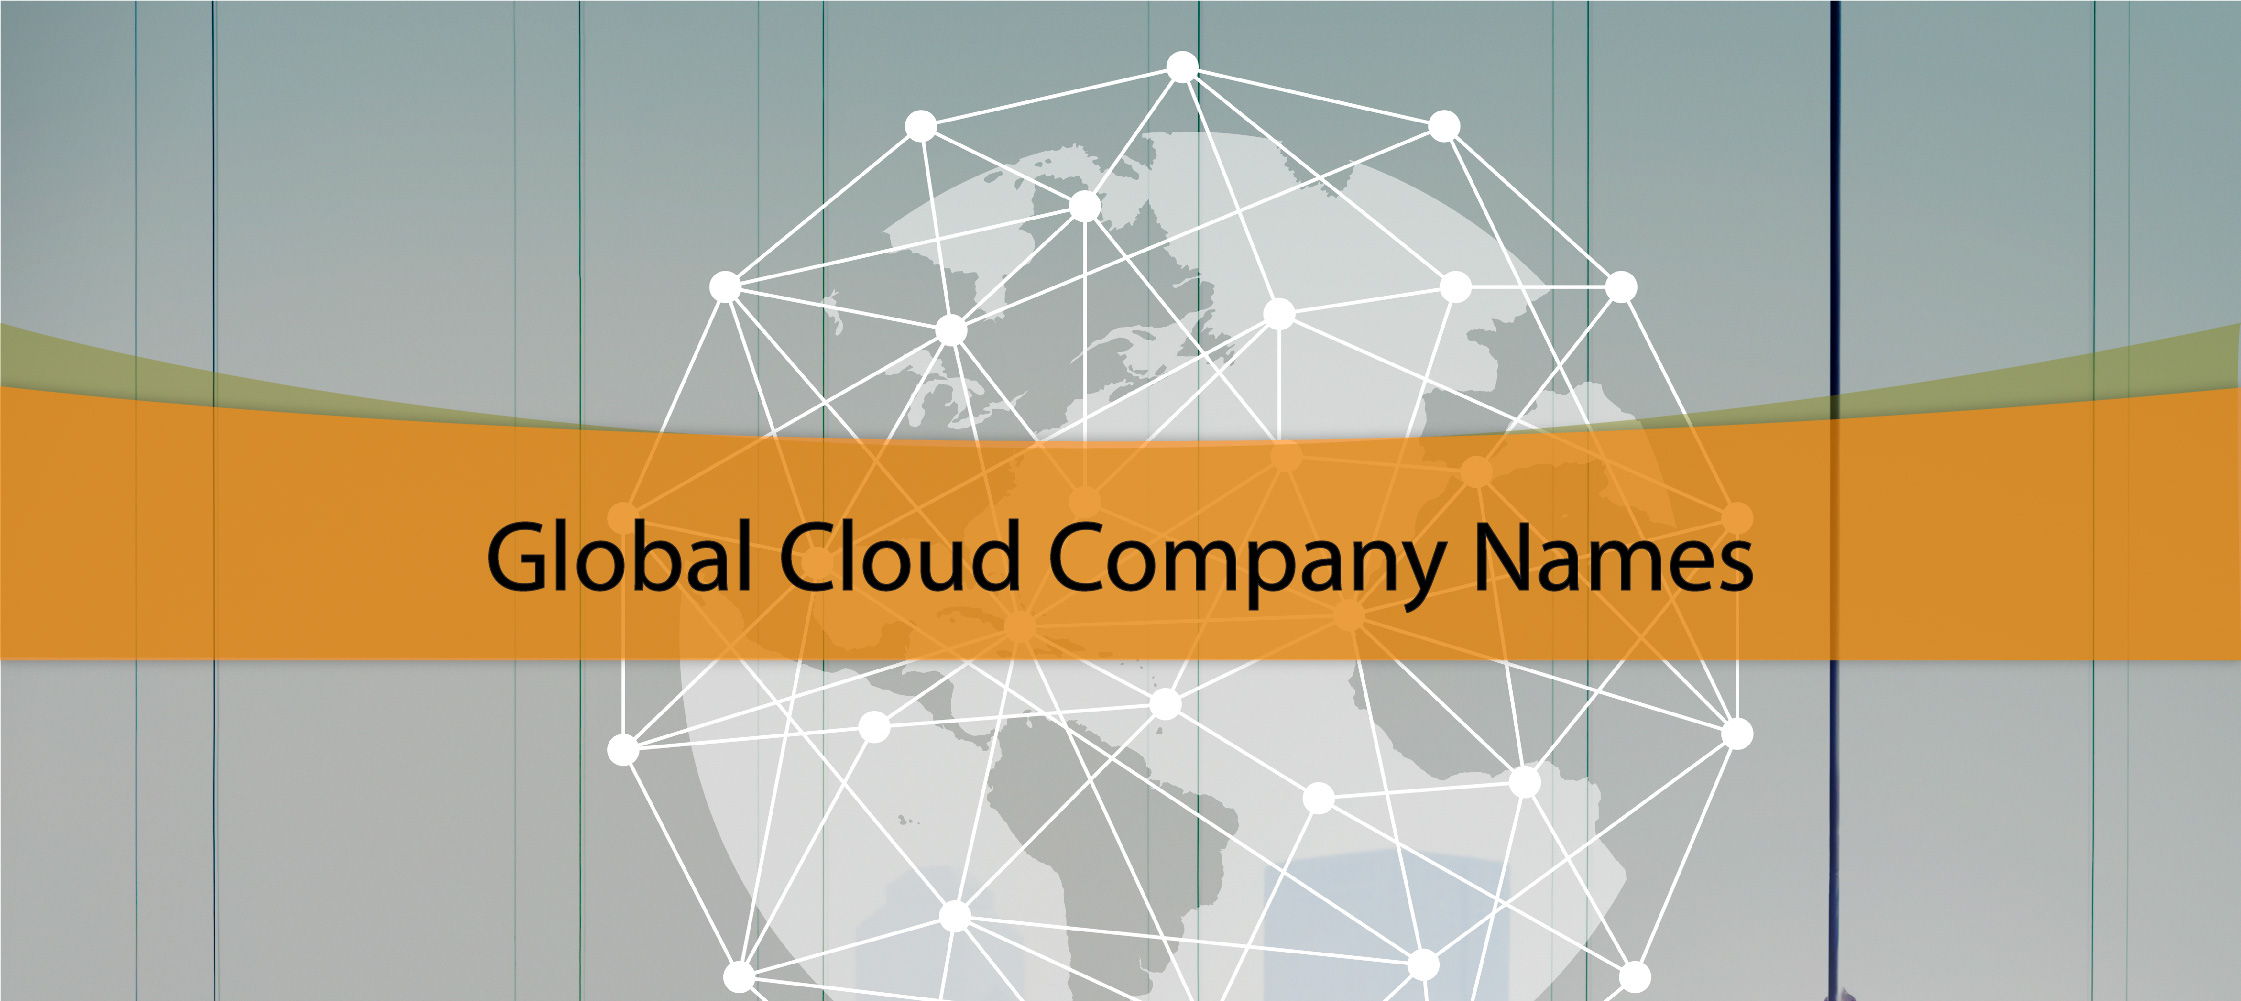 Global Cloud Company Names